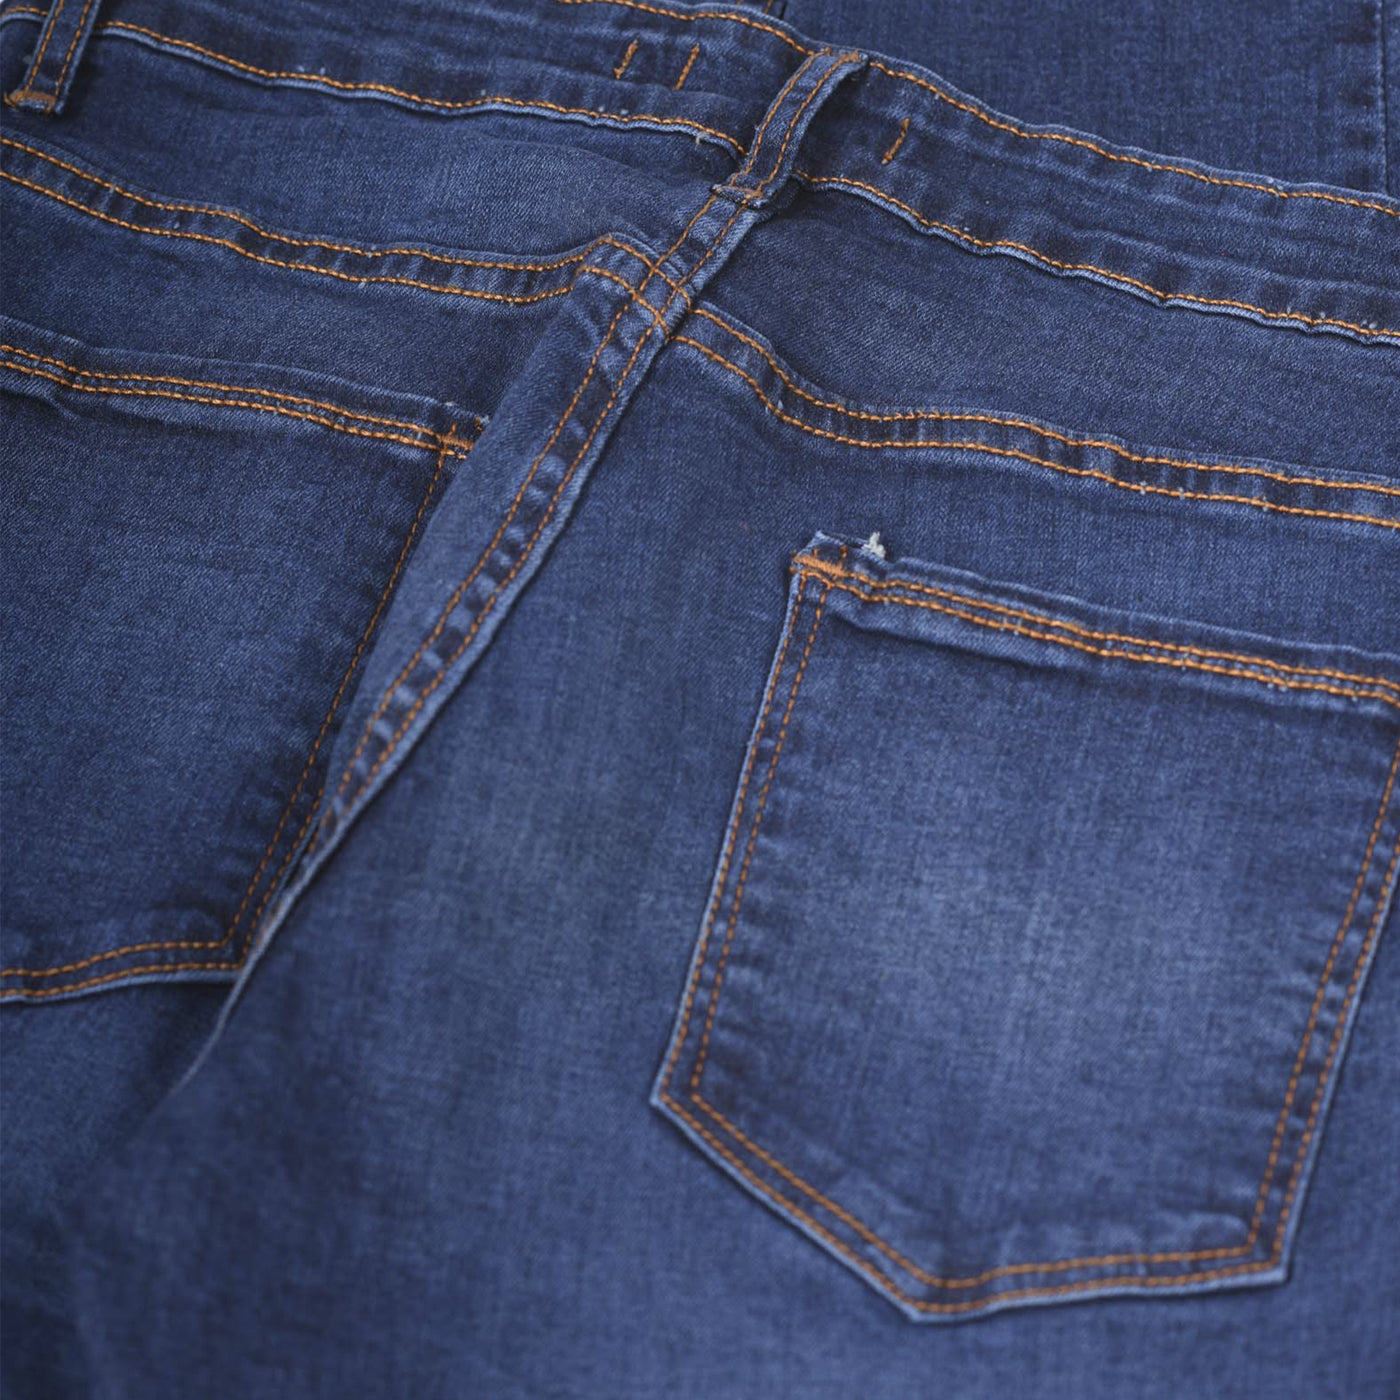 Jeans super denim - MAR DE PLATA - skinny